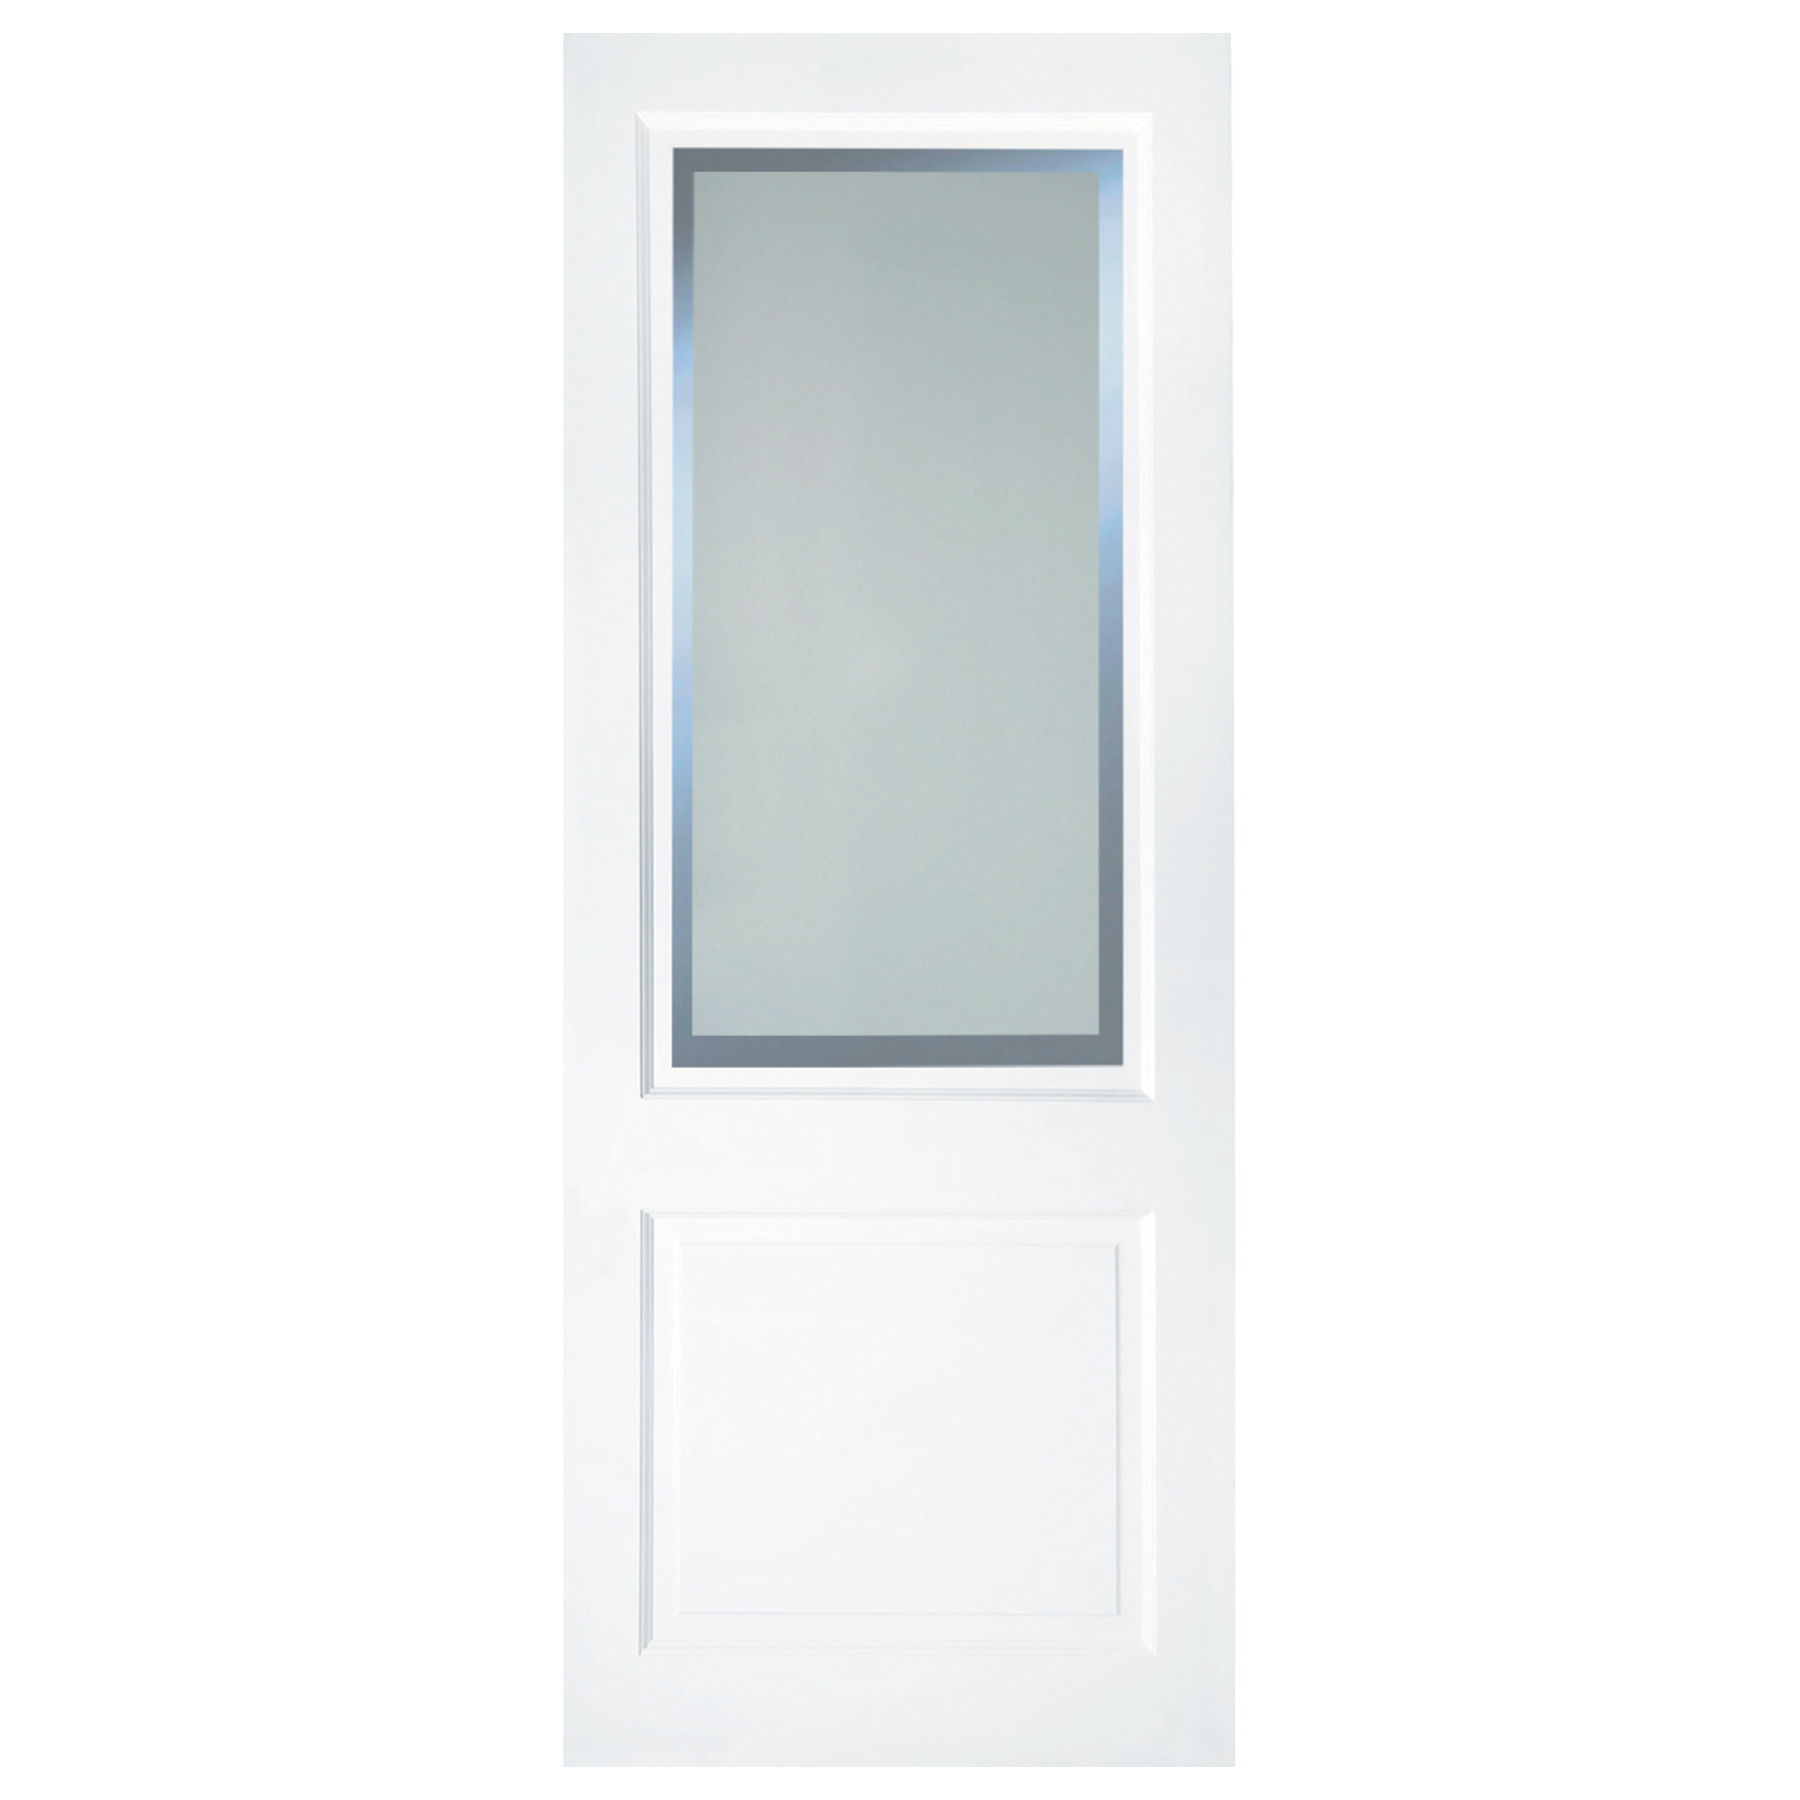 Auburn White Primed Door Etch Glazed - Clear Border 78X30